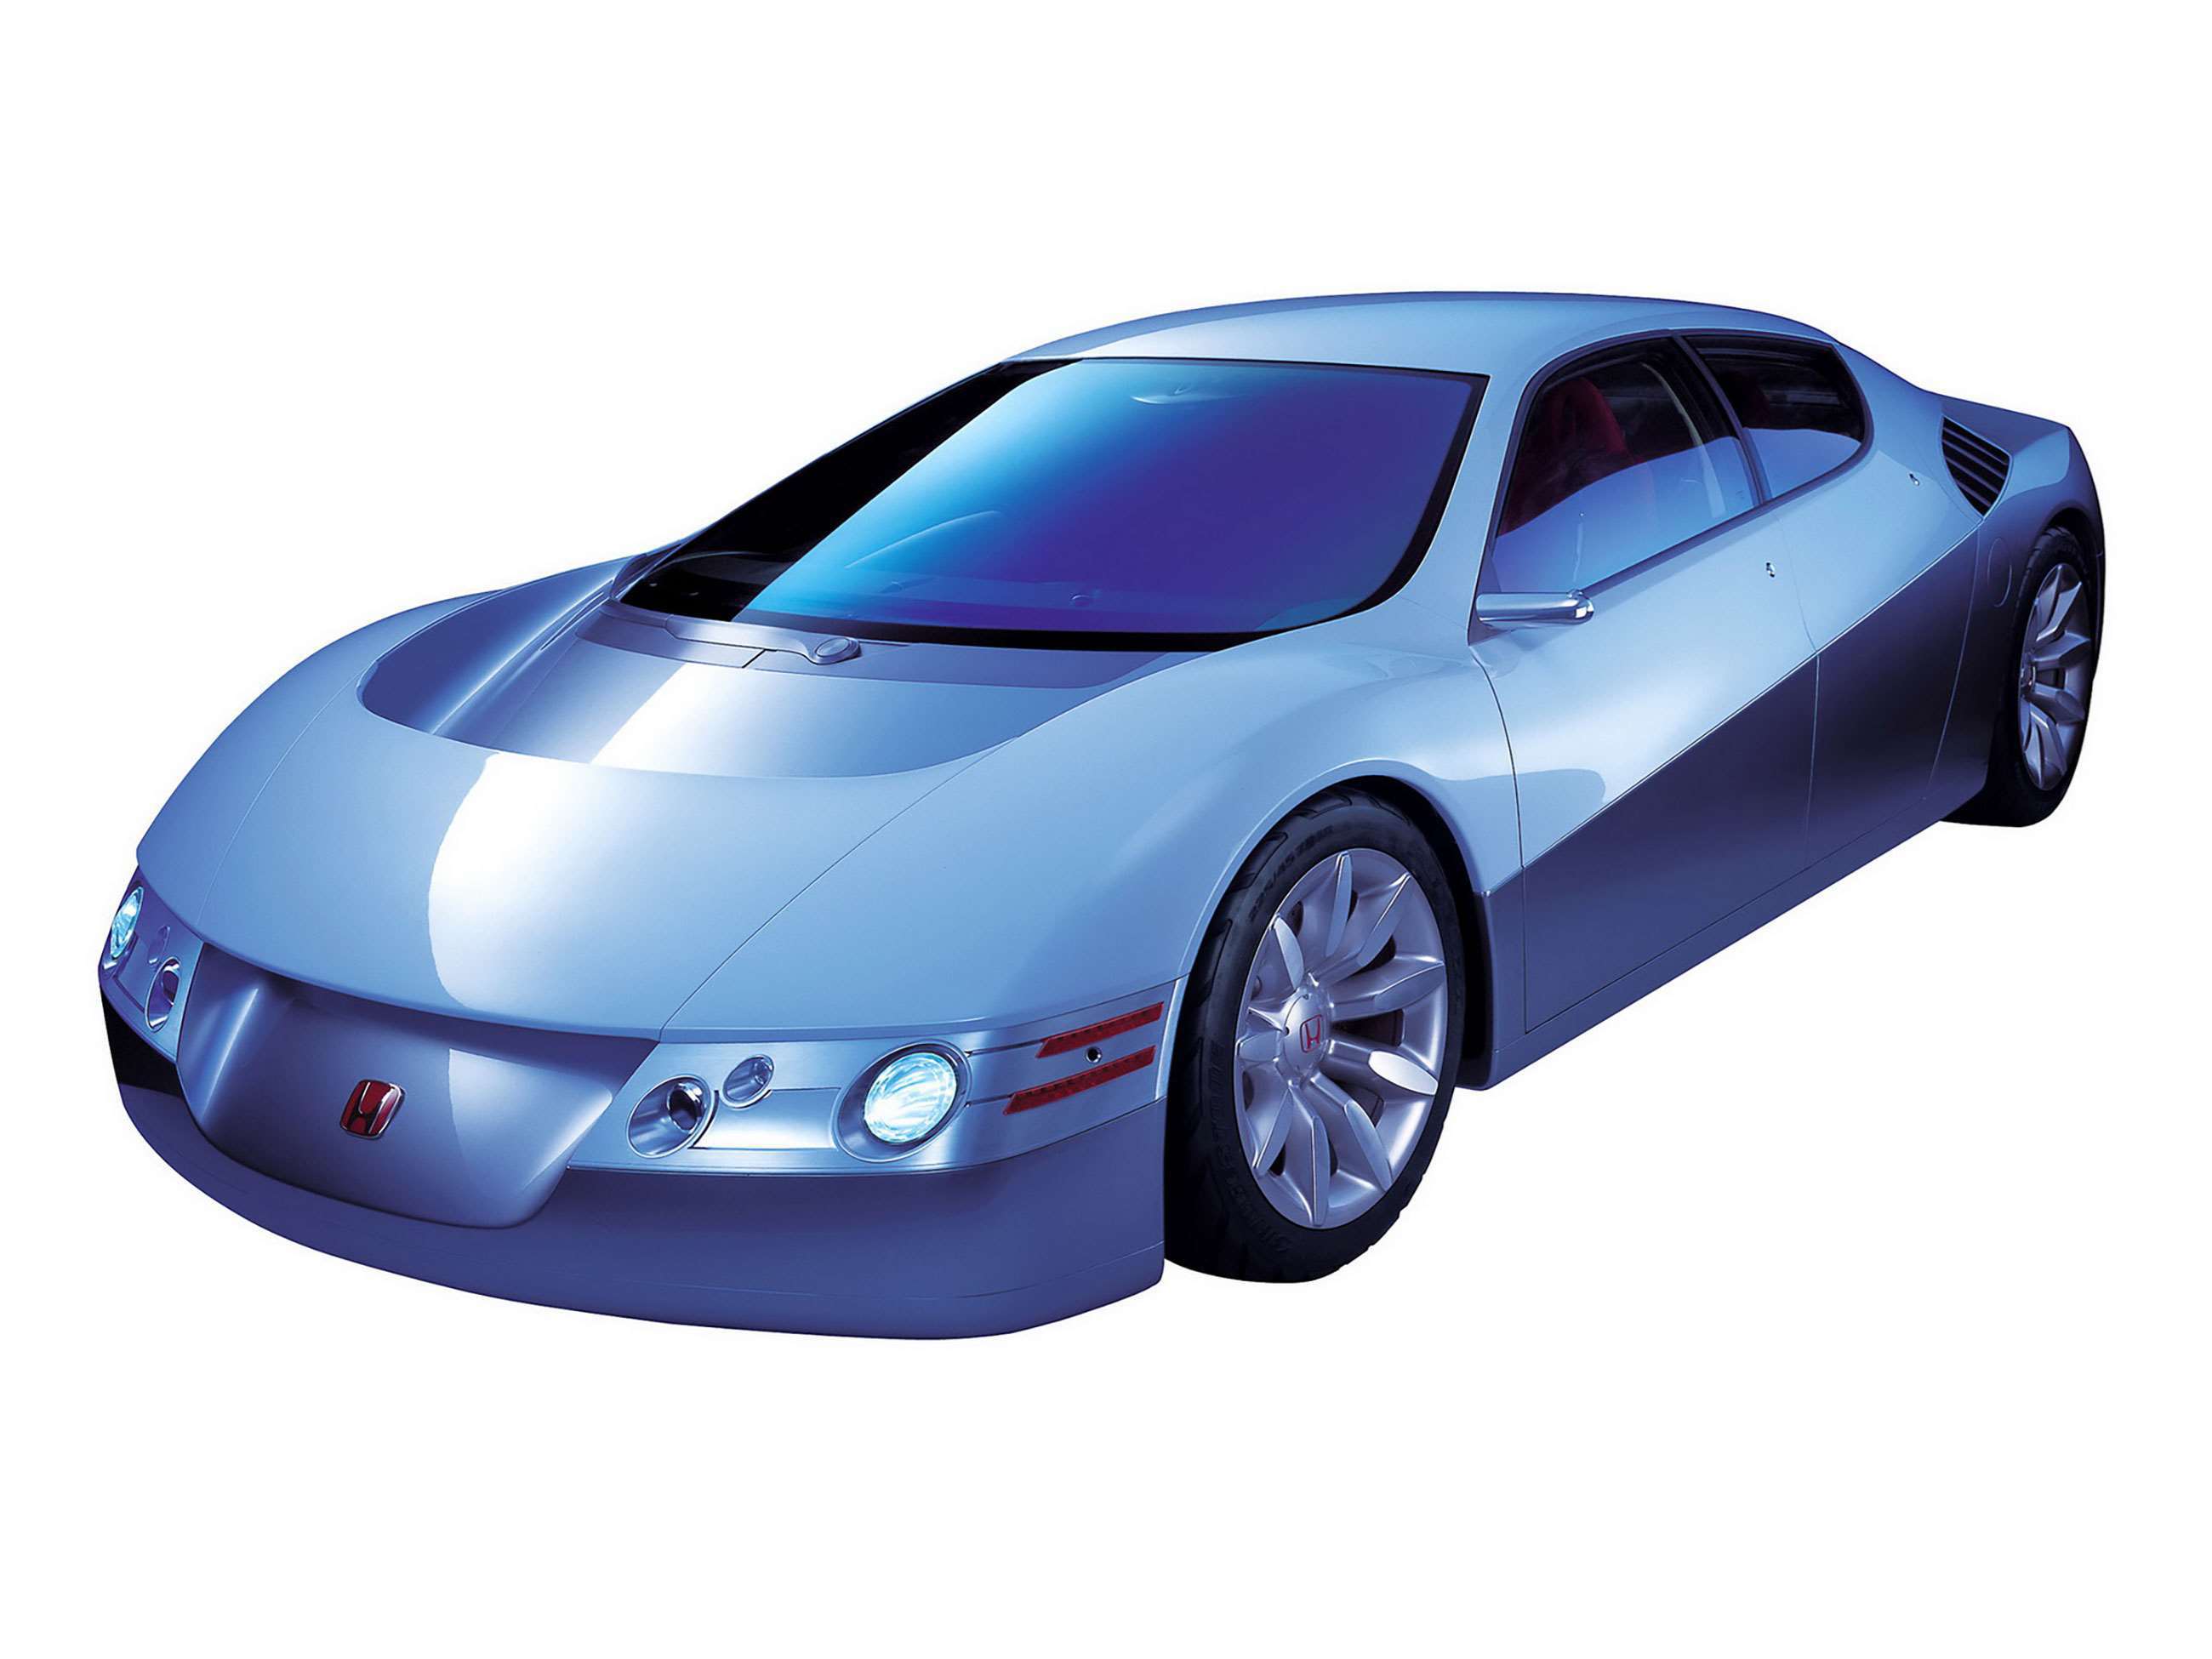 best-honda-concept-cars-5-honda-dualnote-concept-goodwood-30112020.jpg